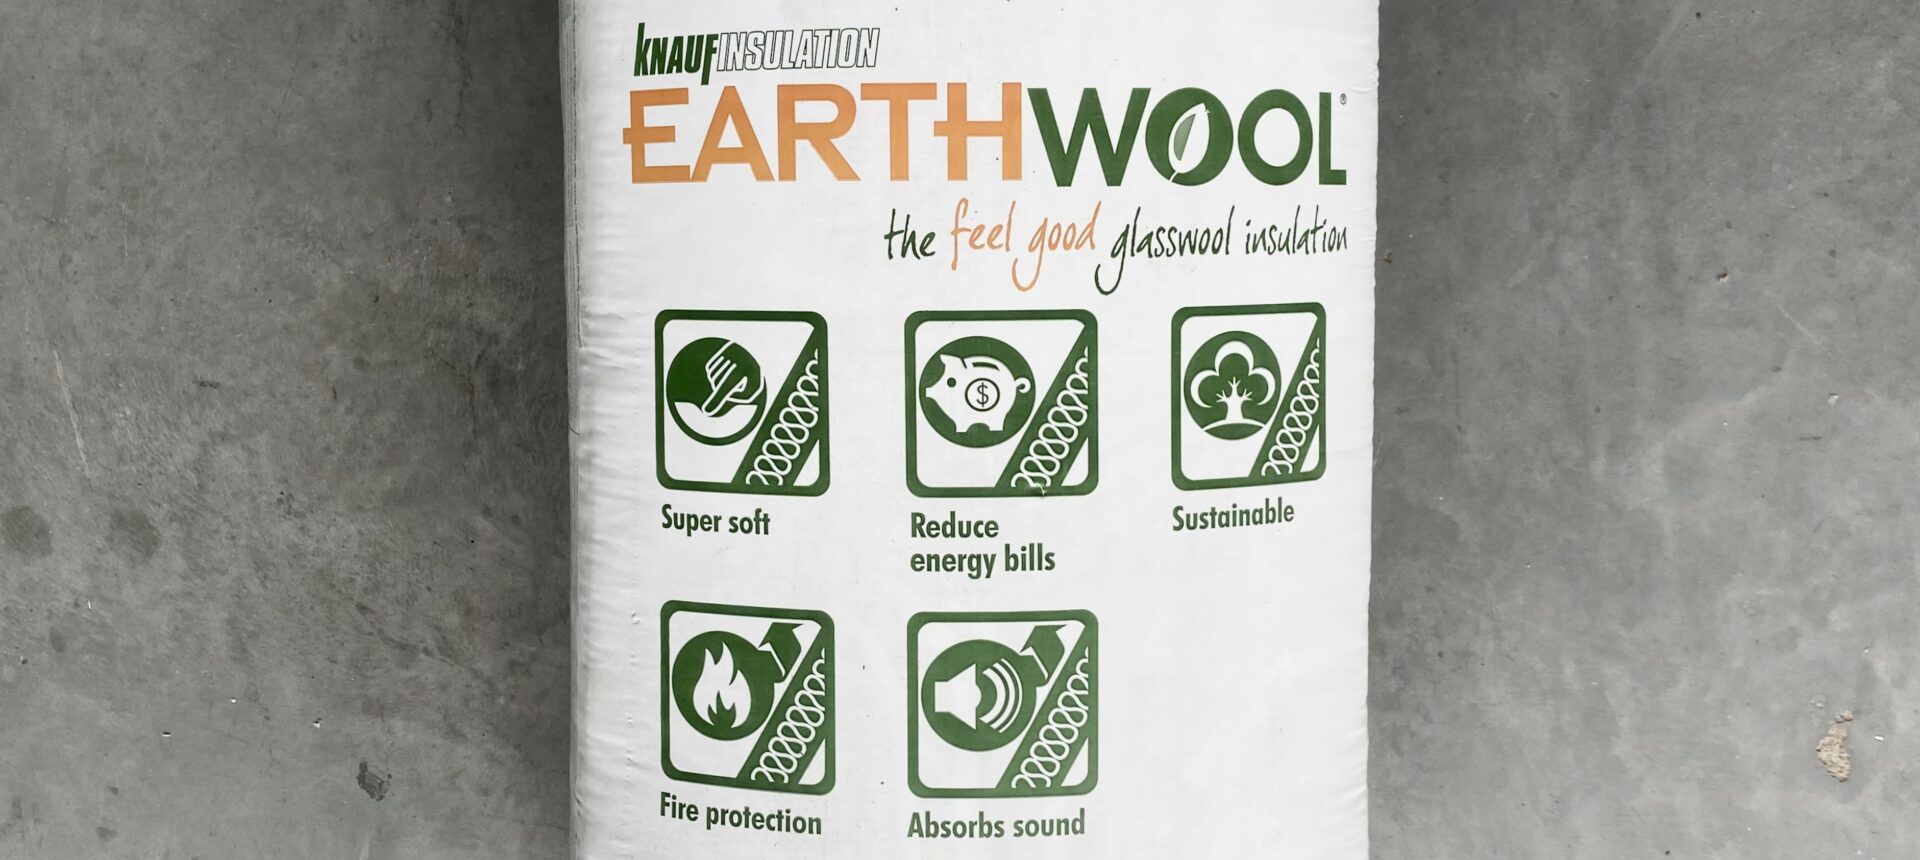 A bag of Knauf Earthwool Insulation